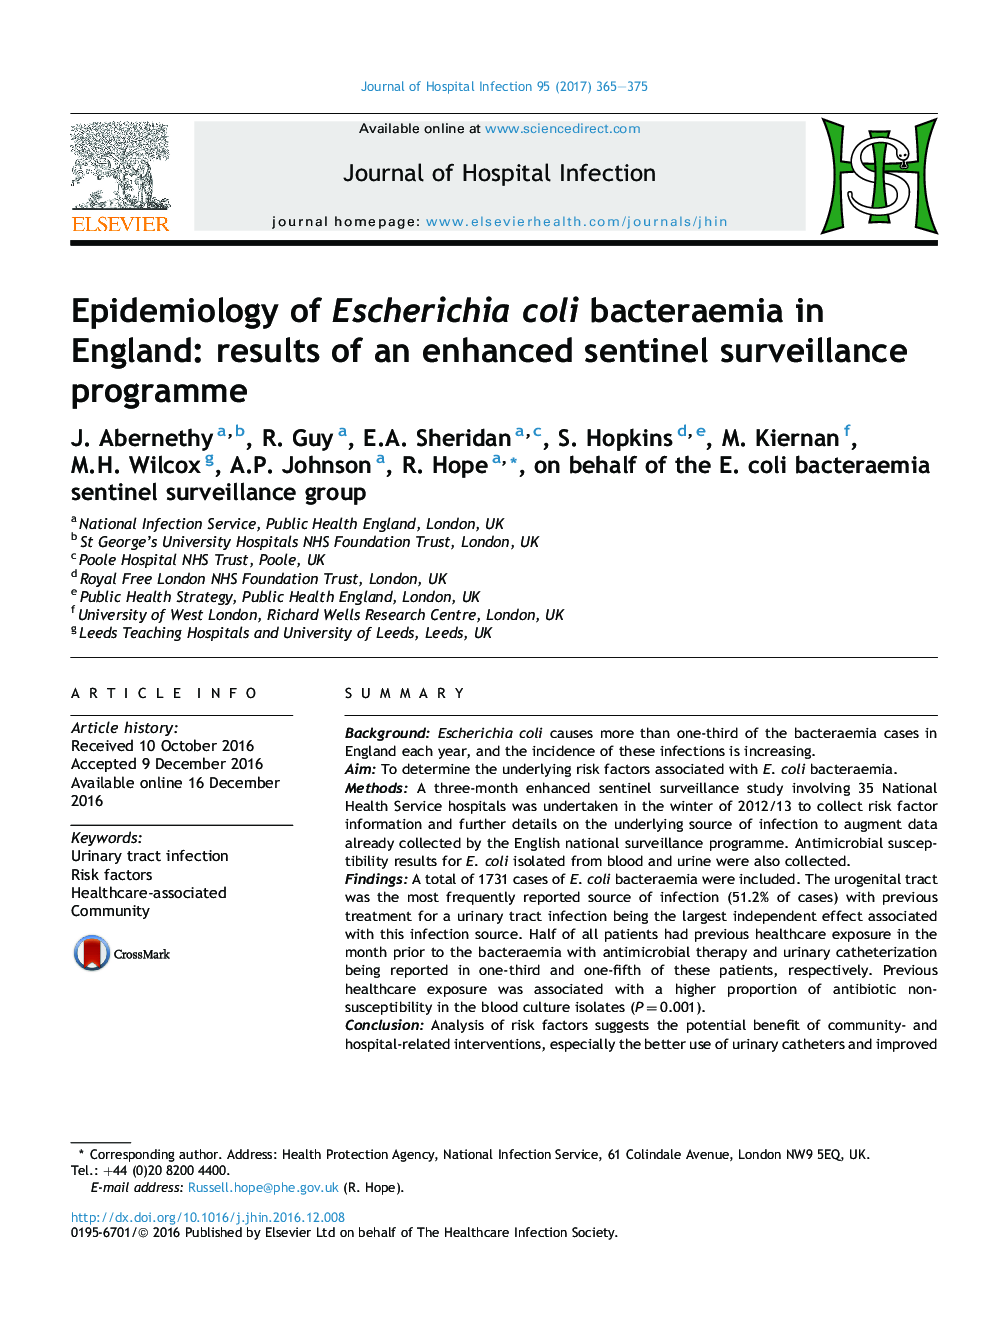 Epidemiology of Escherichia coli bacteraemia in England: results of an enhanced sentinel surveillance programme